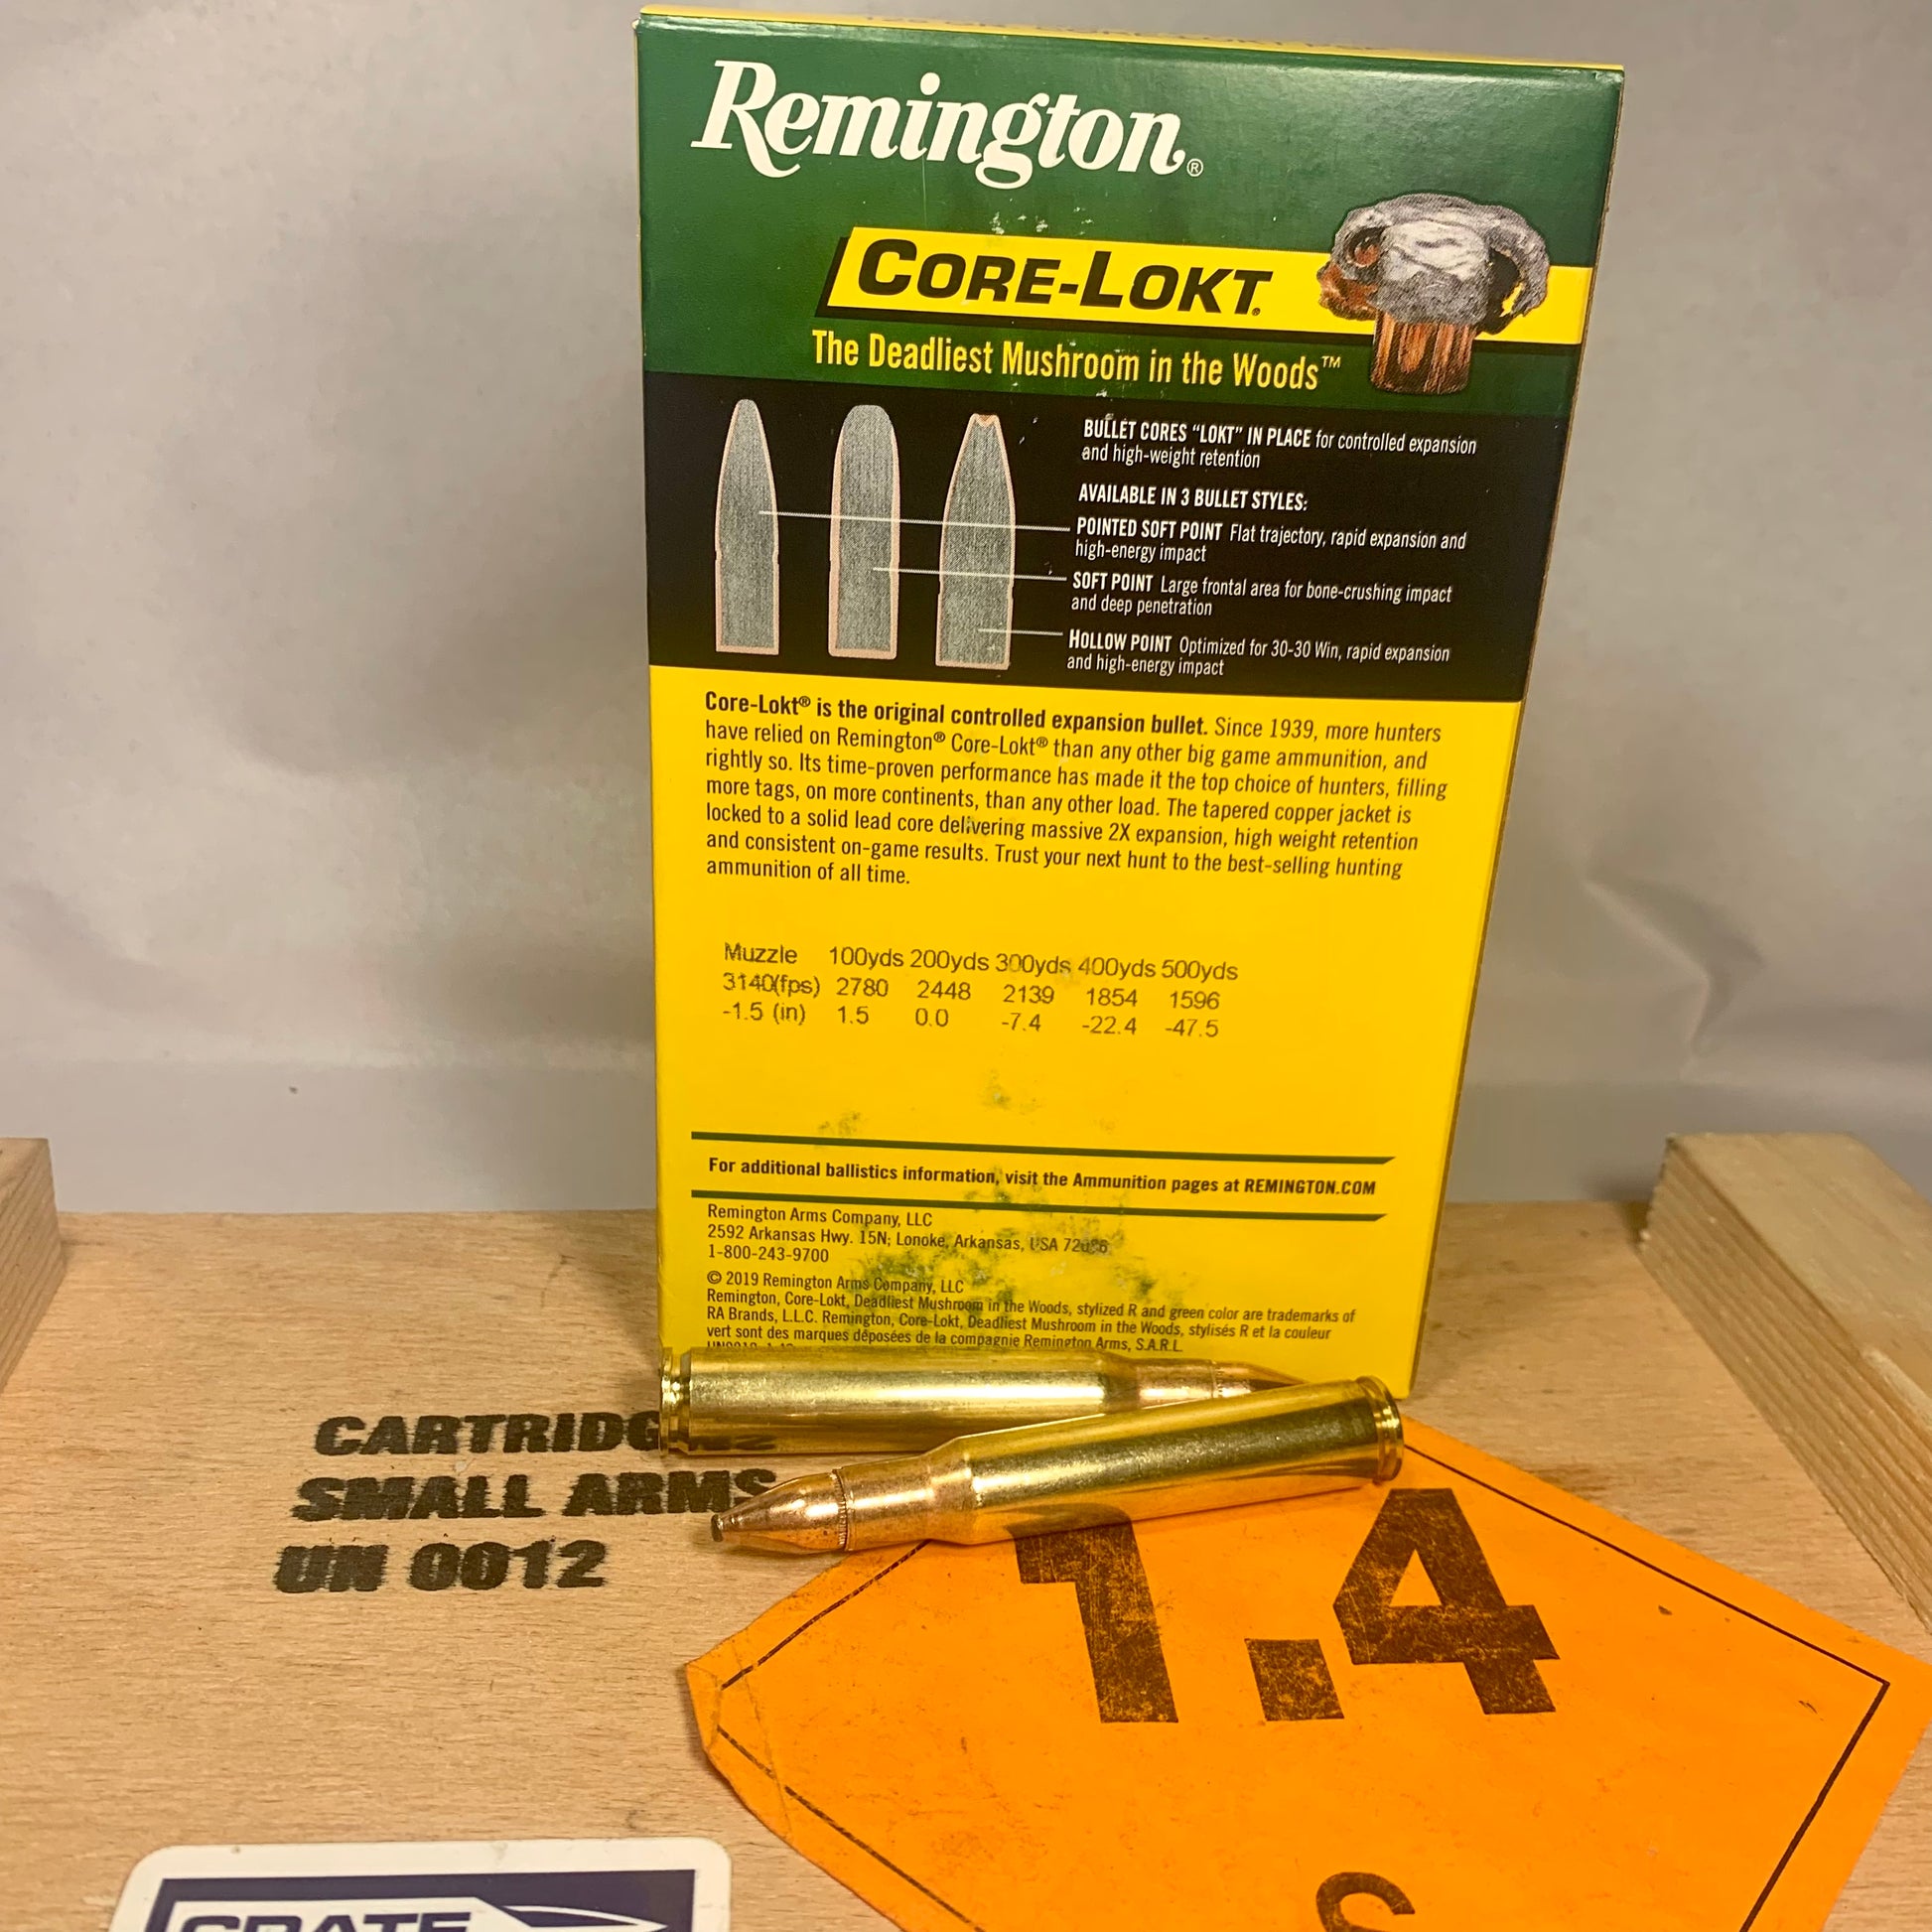 20 Round Box Remington CoreLokt .30-06 Ammo 125gr PSP - 21401